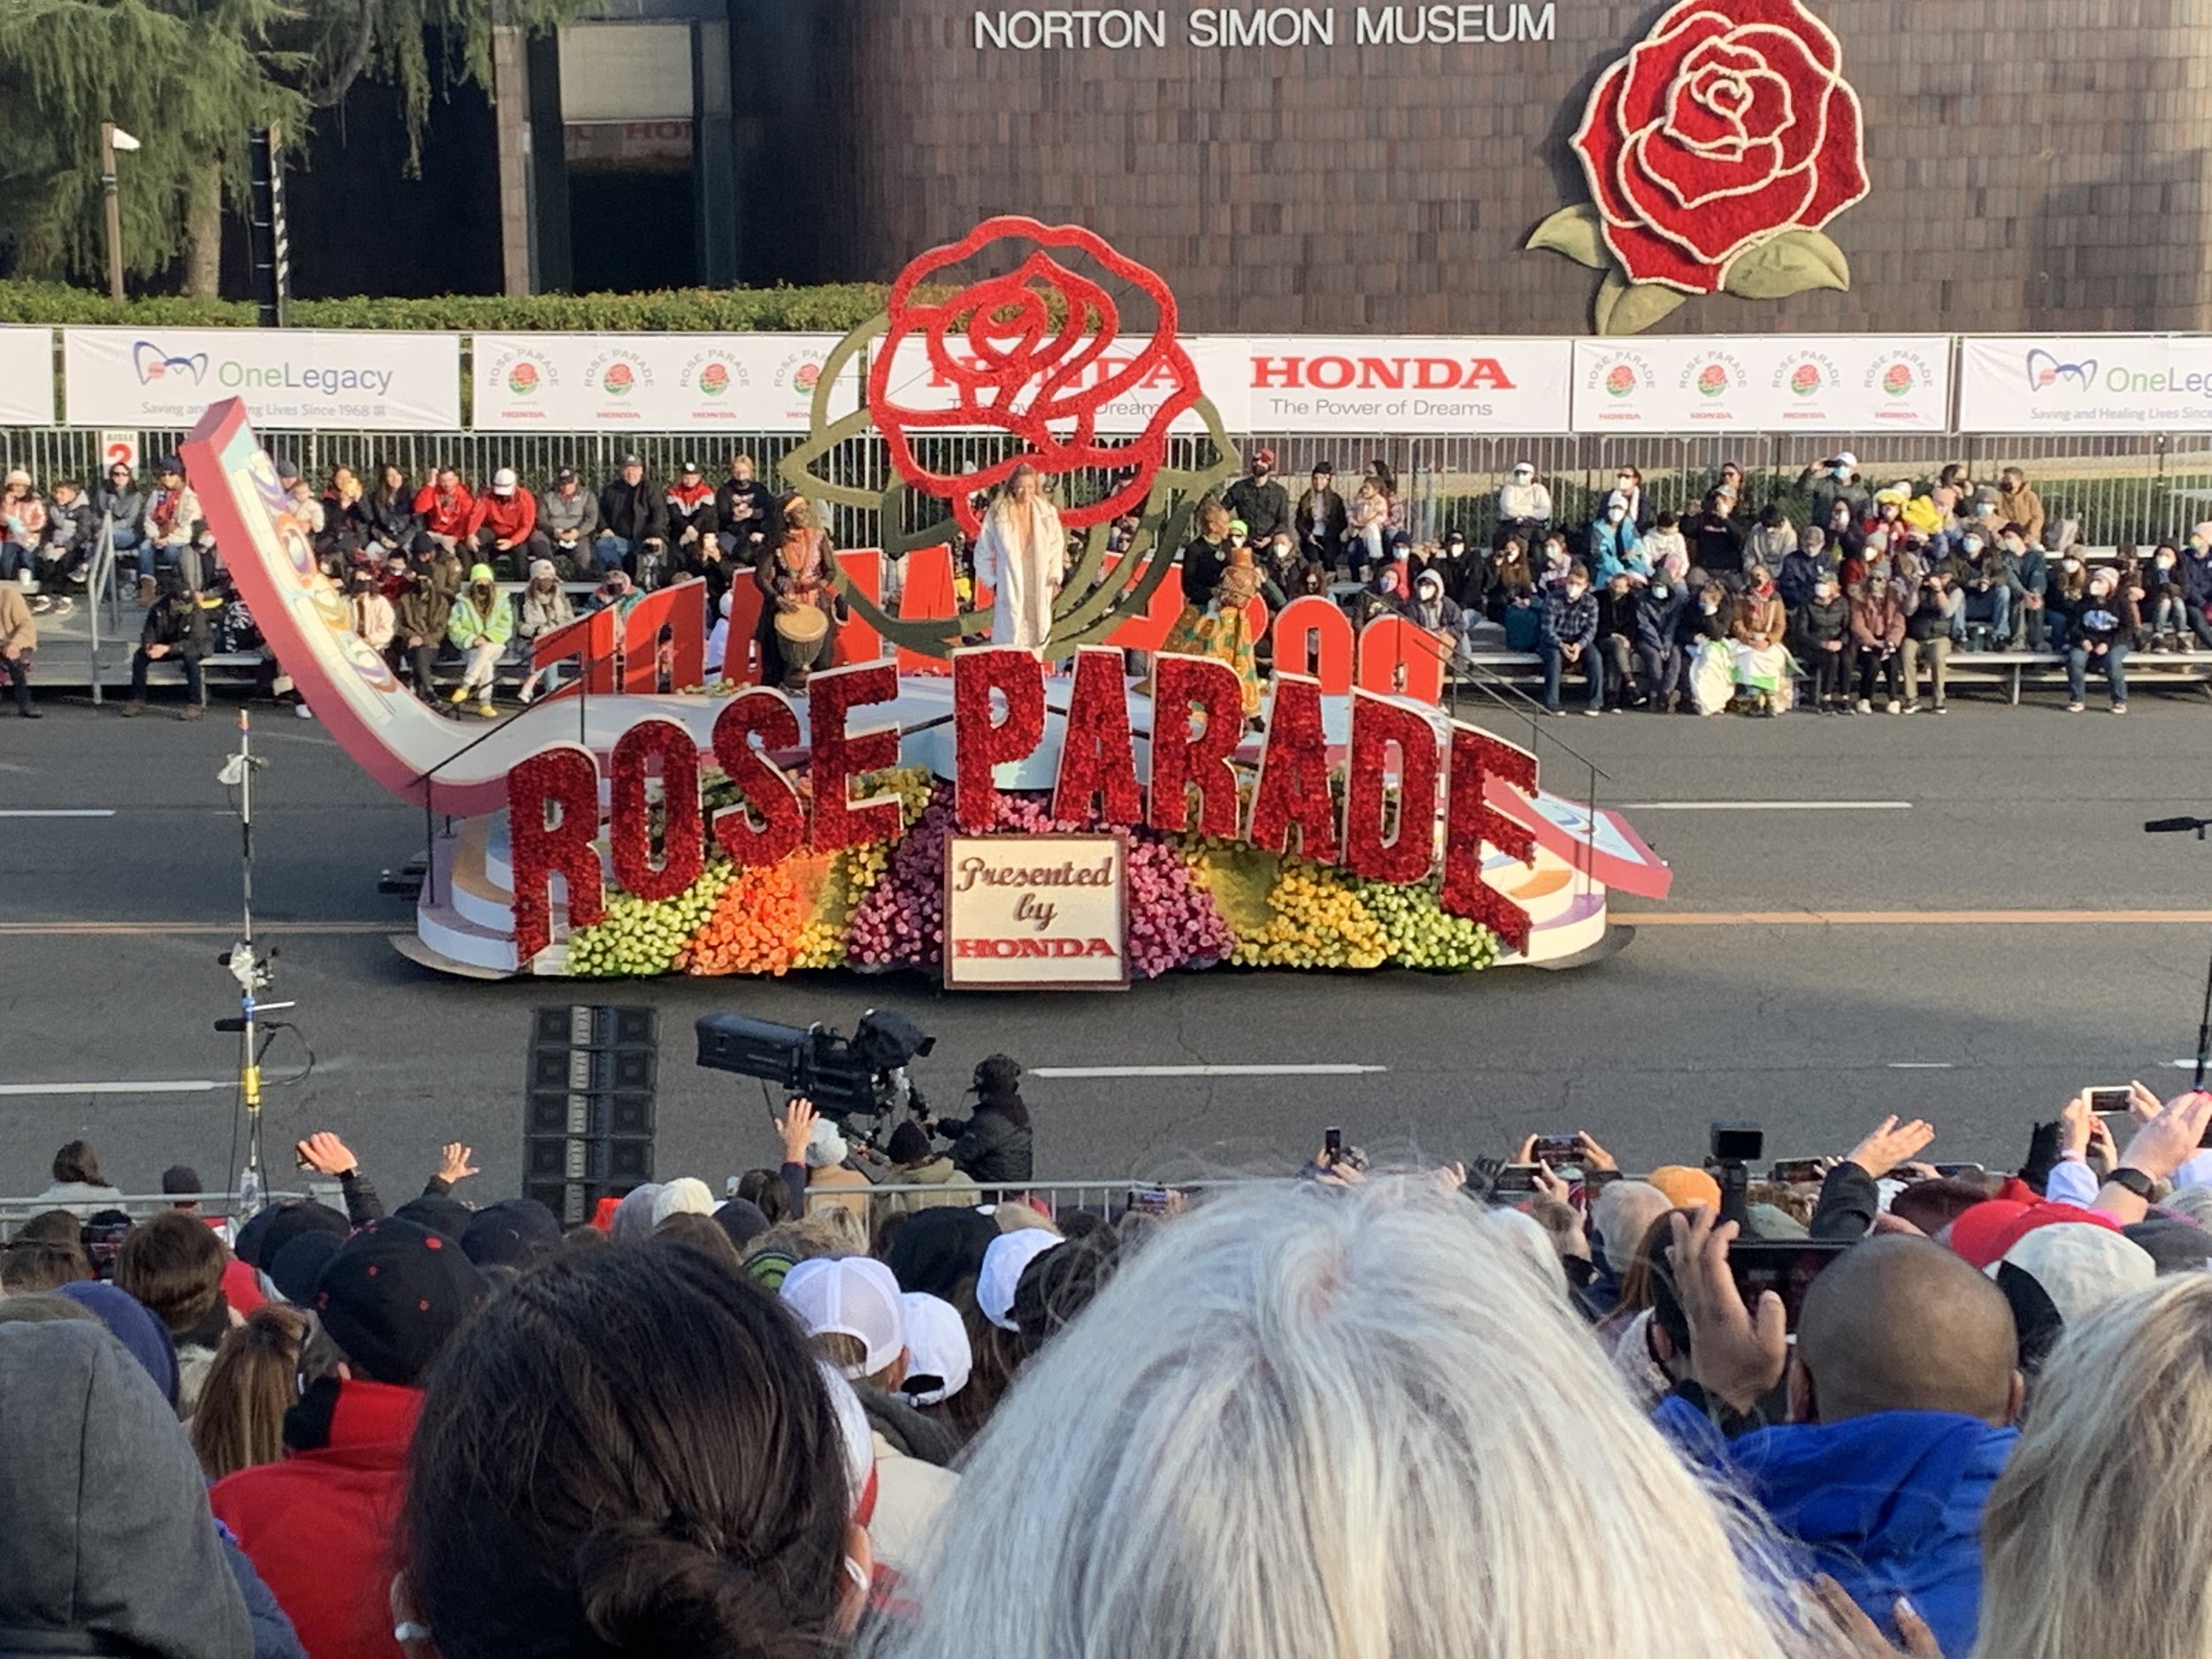 Rose Parade!